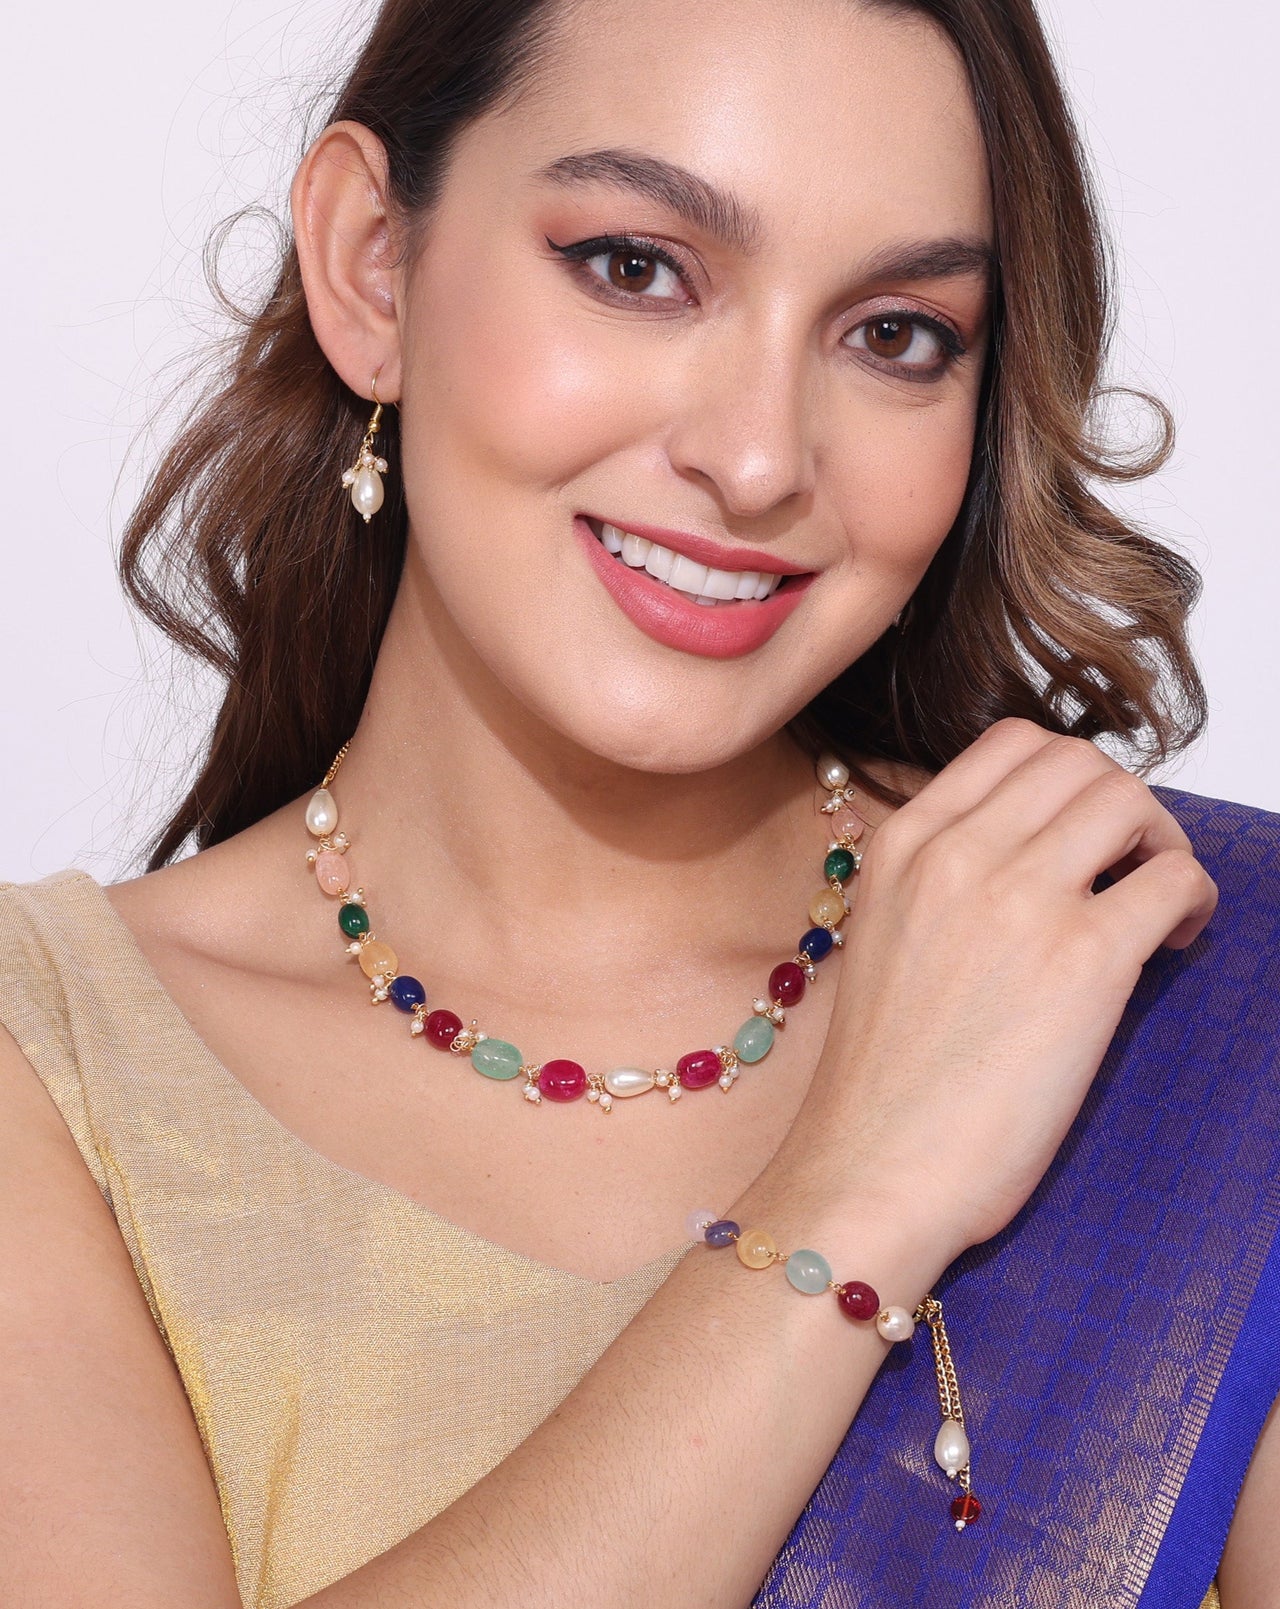 Multicolour Beads Necklace Earrings Bracelet Party Combo - Abdesignsjewellery